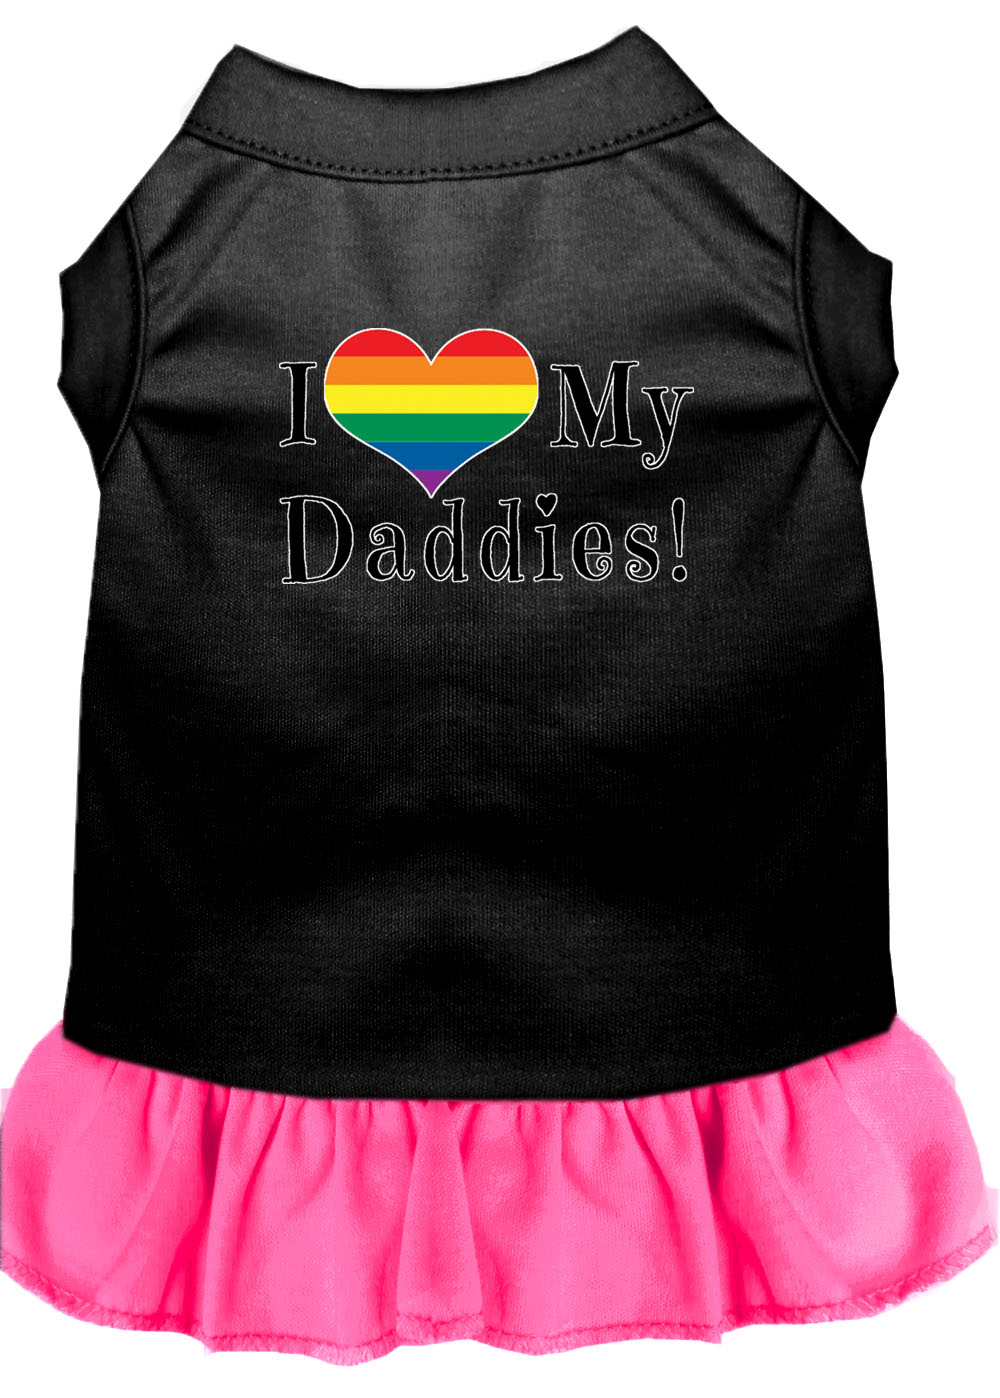 I Heart my Daddies Screen Print Dog Dress Black with Bright Pink XL